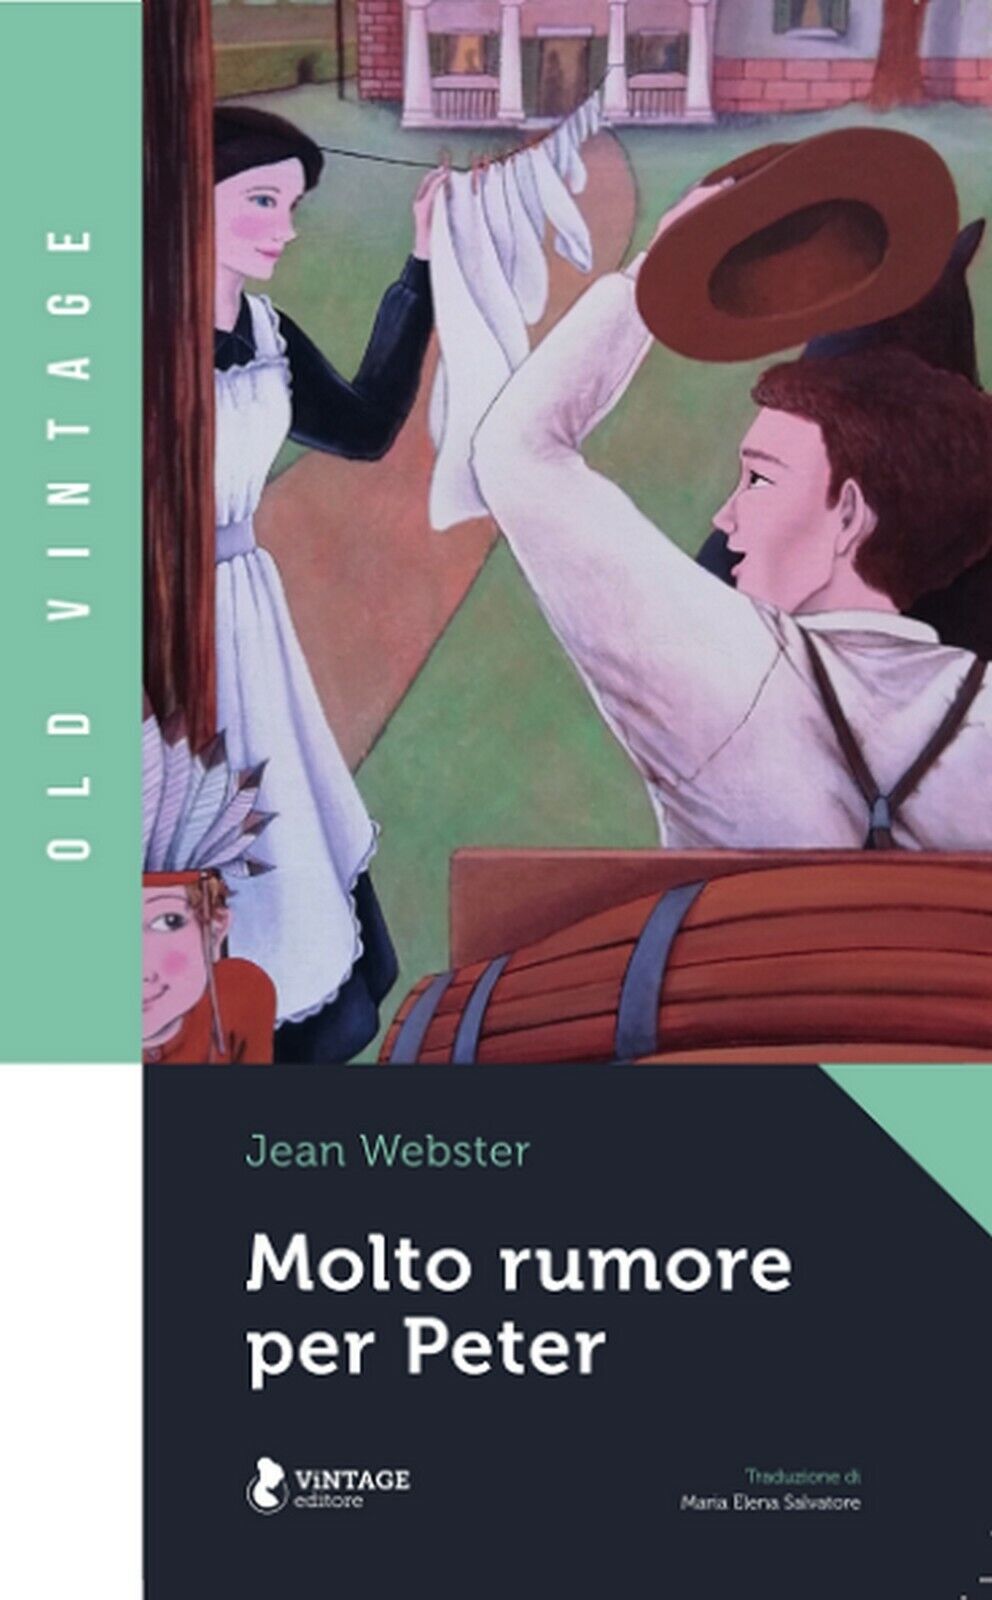 MOLTO RUMORE PER PETER  di Jean Webster,  2020,  Vintage Editore